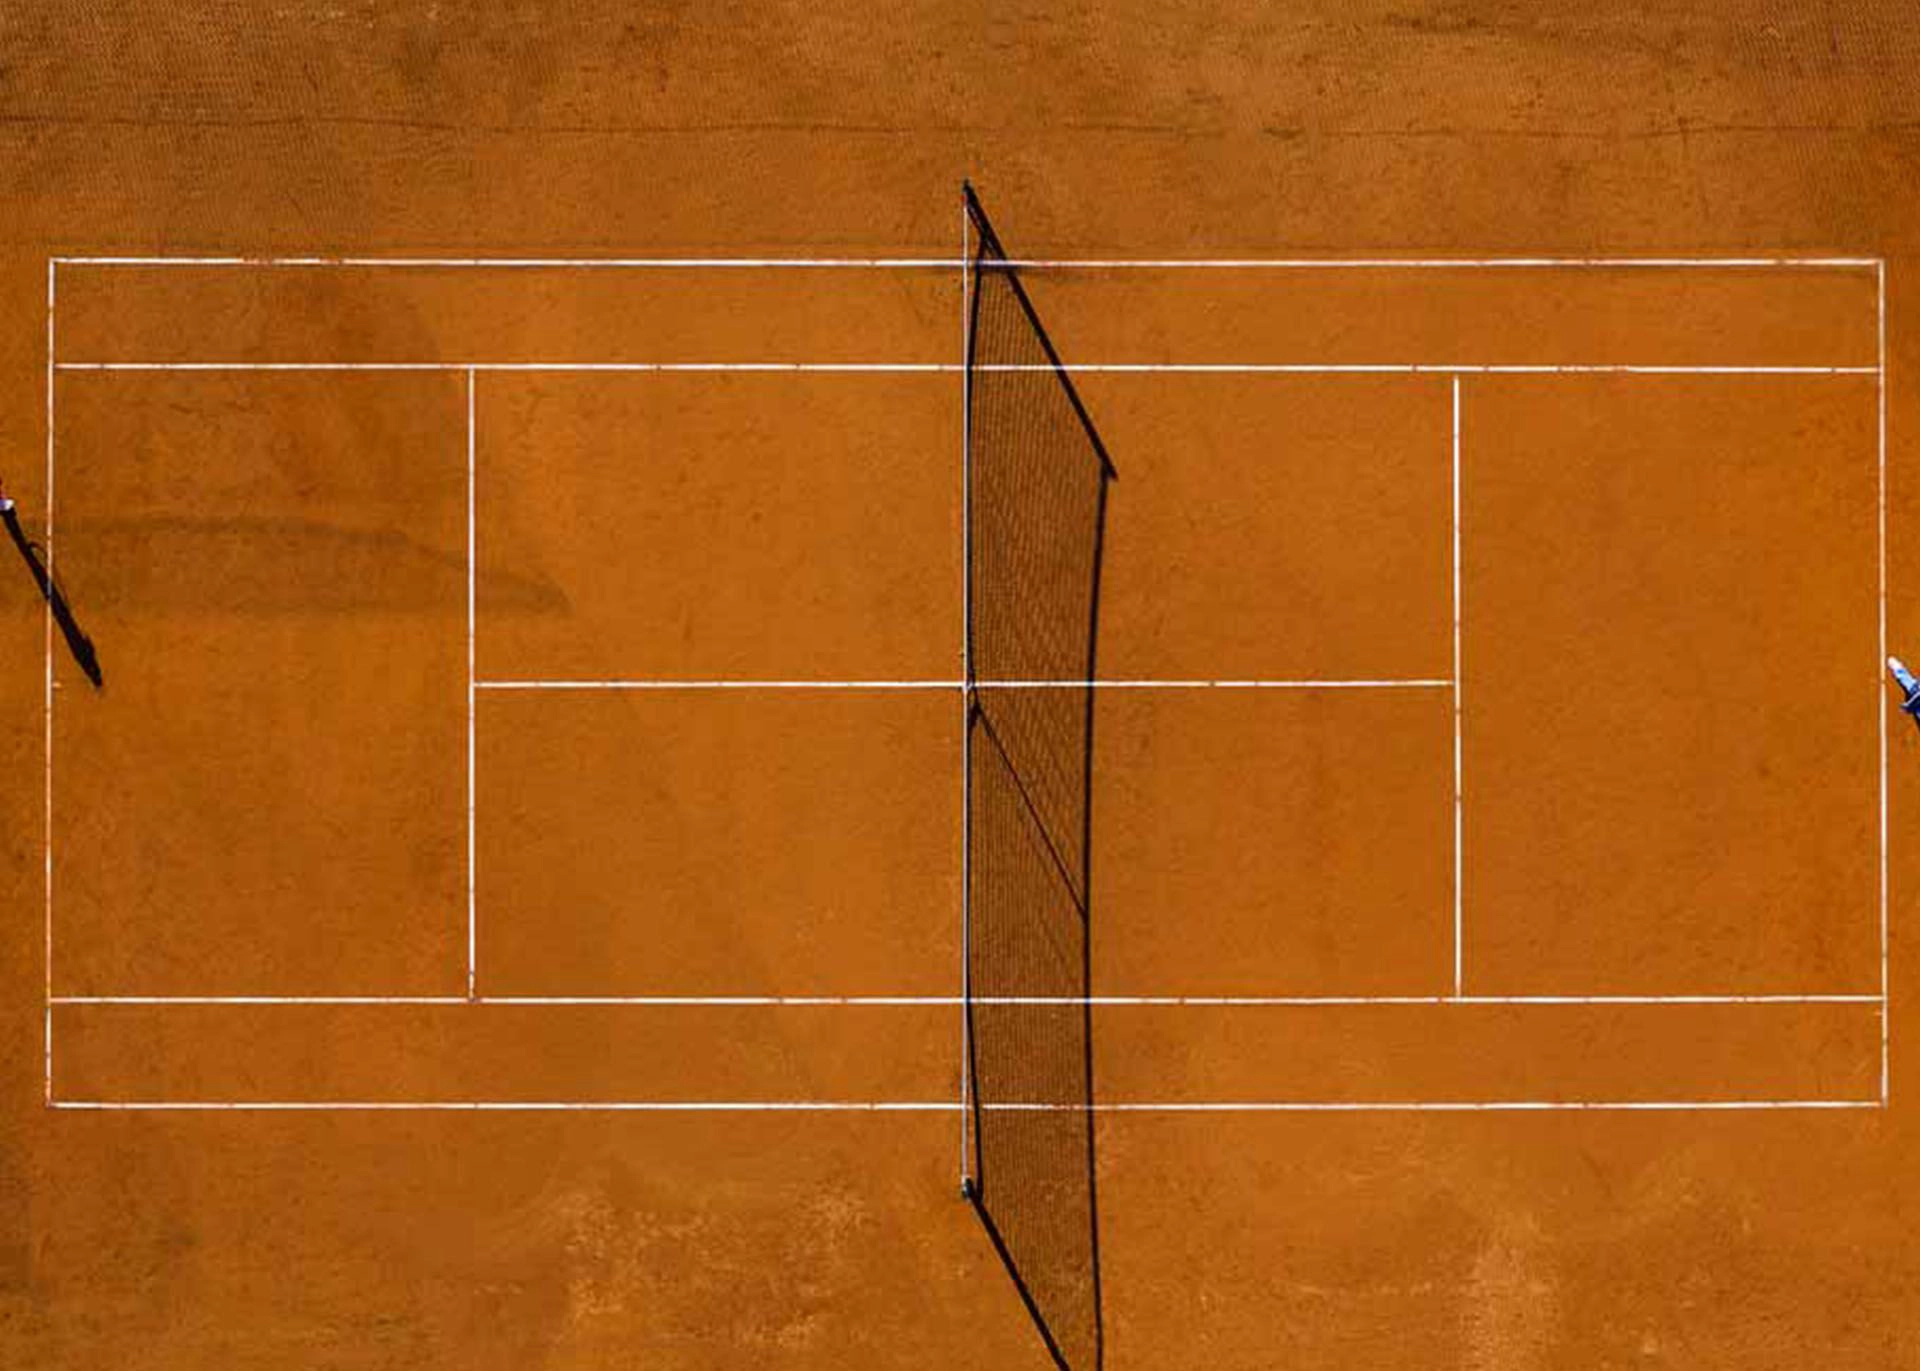 clay court tennis